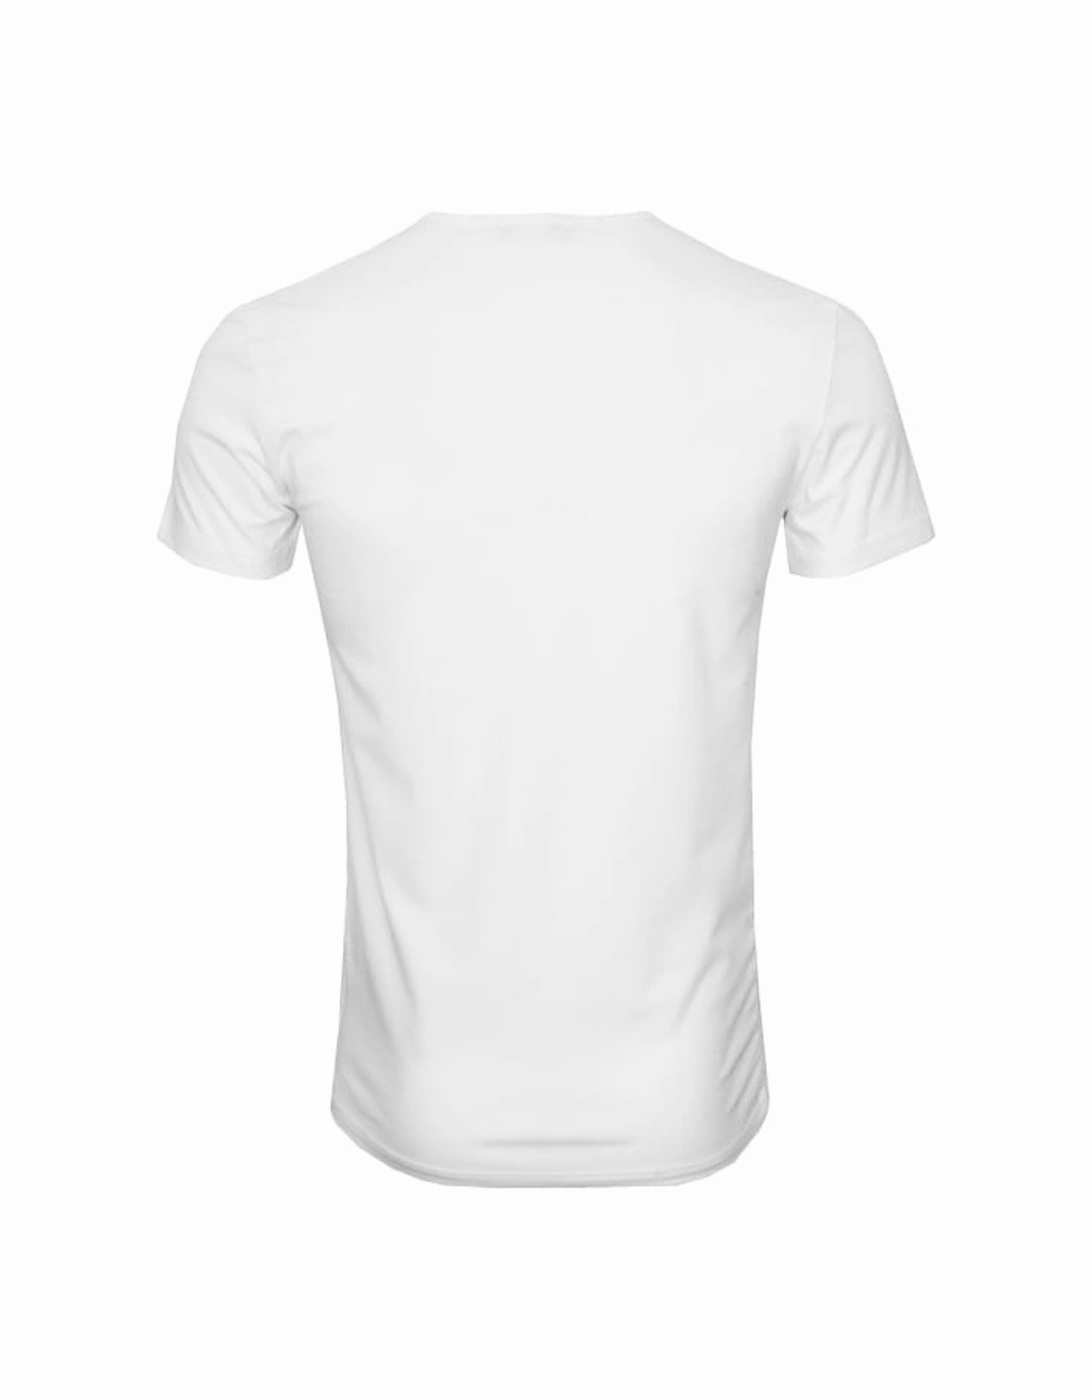 Medusa T-Shirt, White